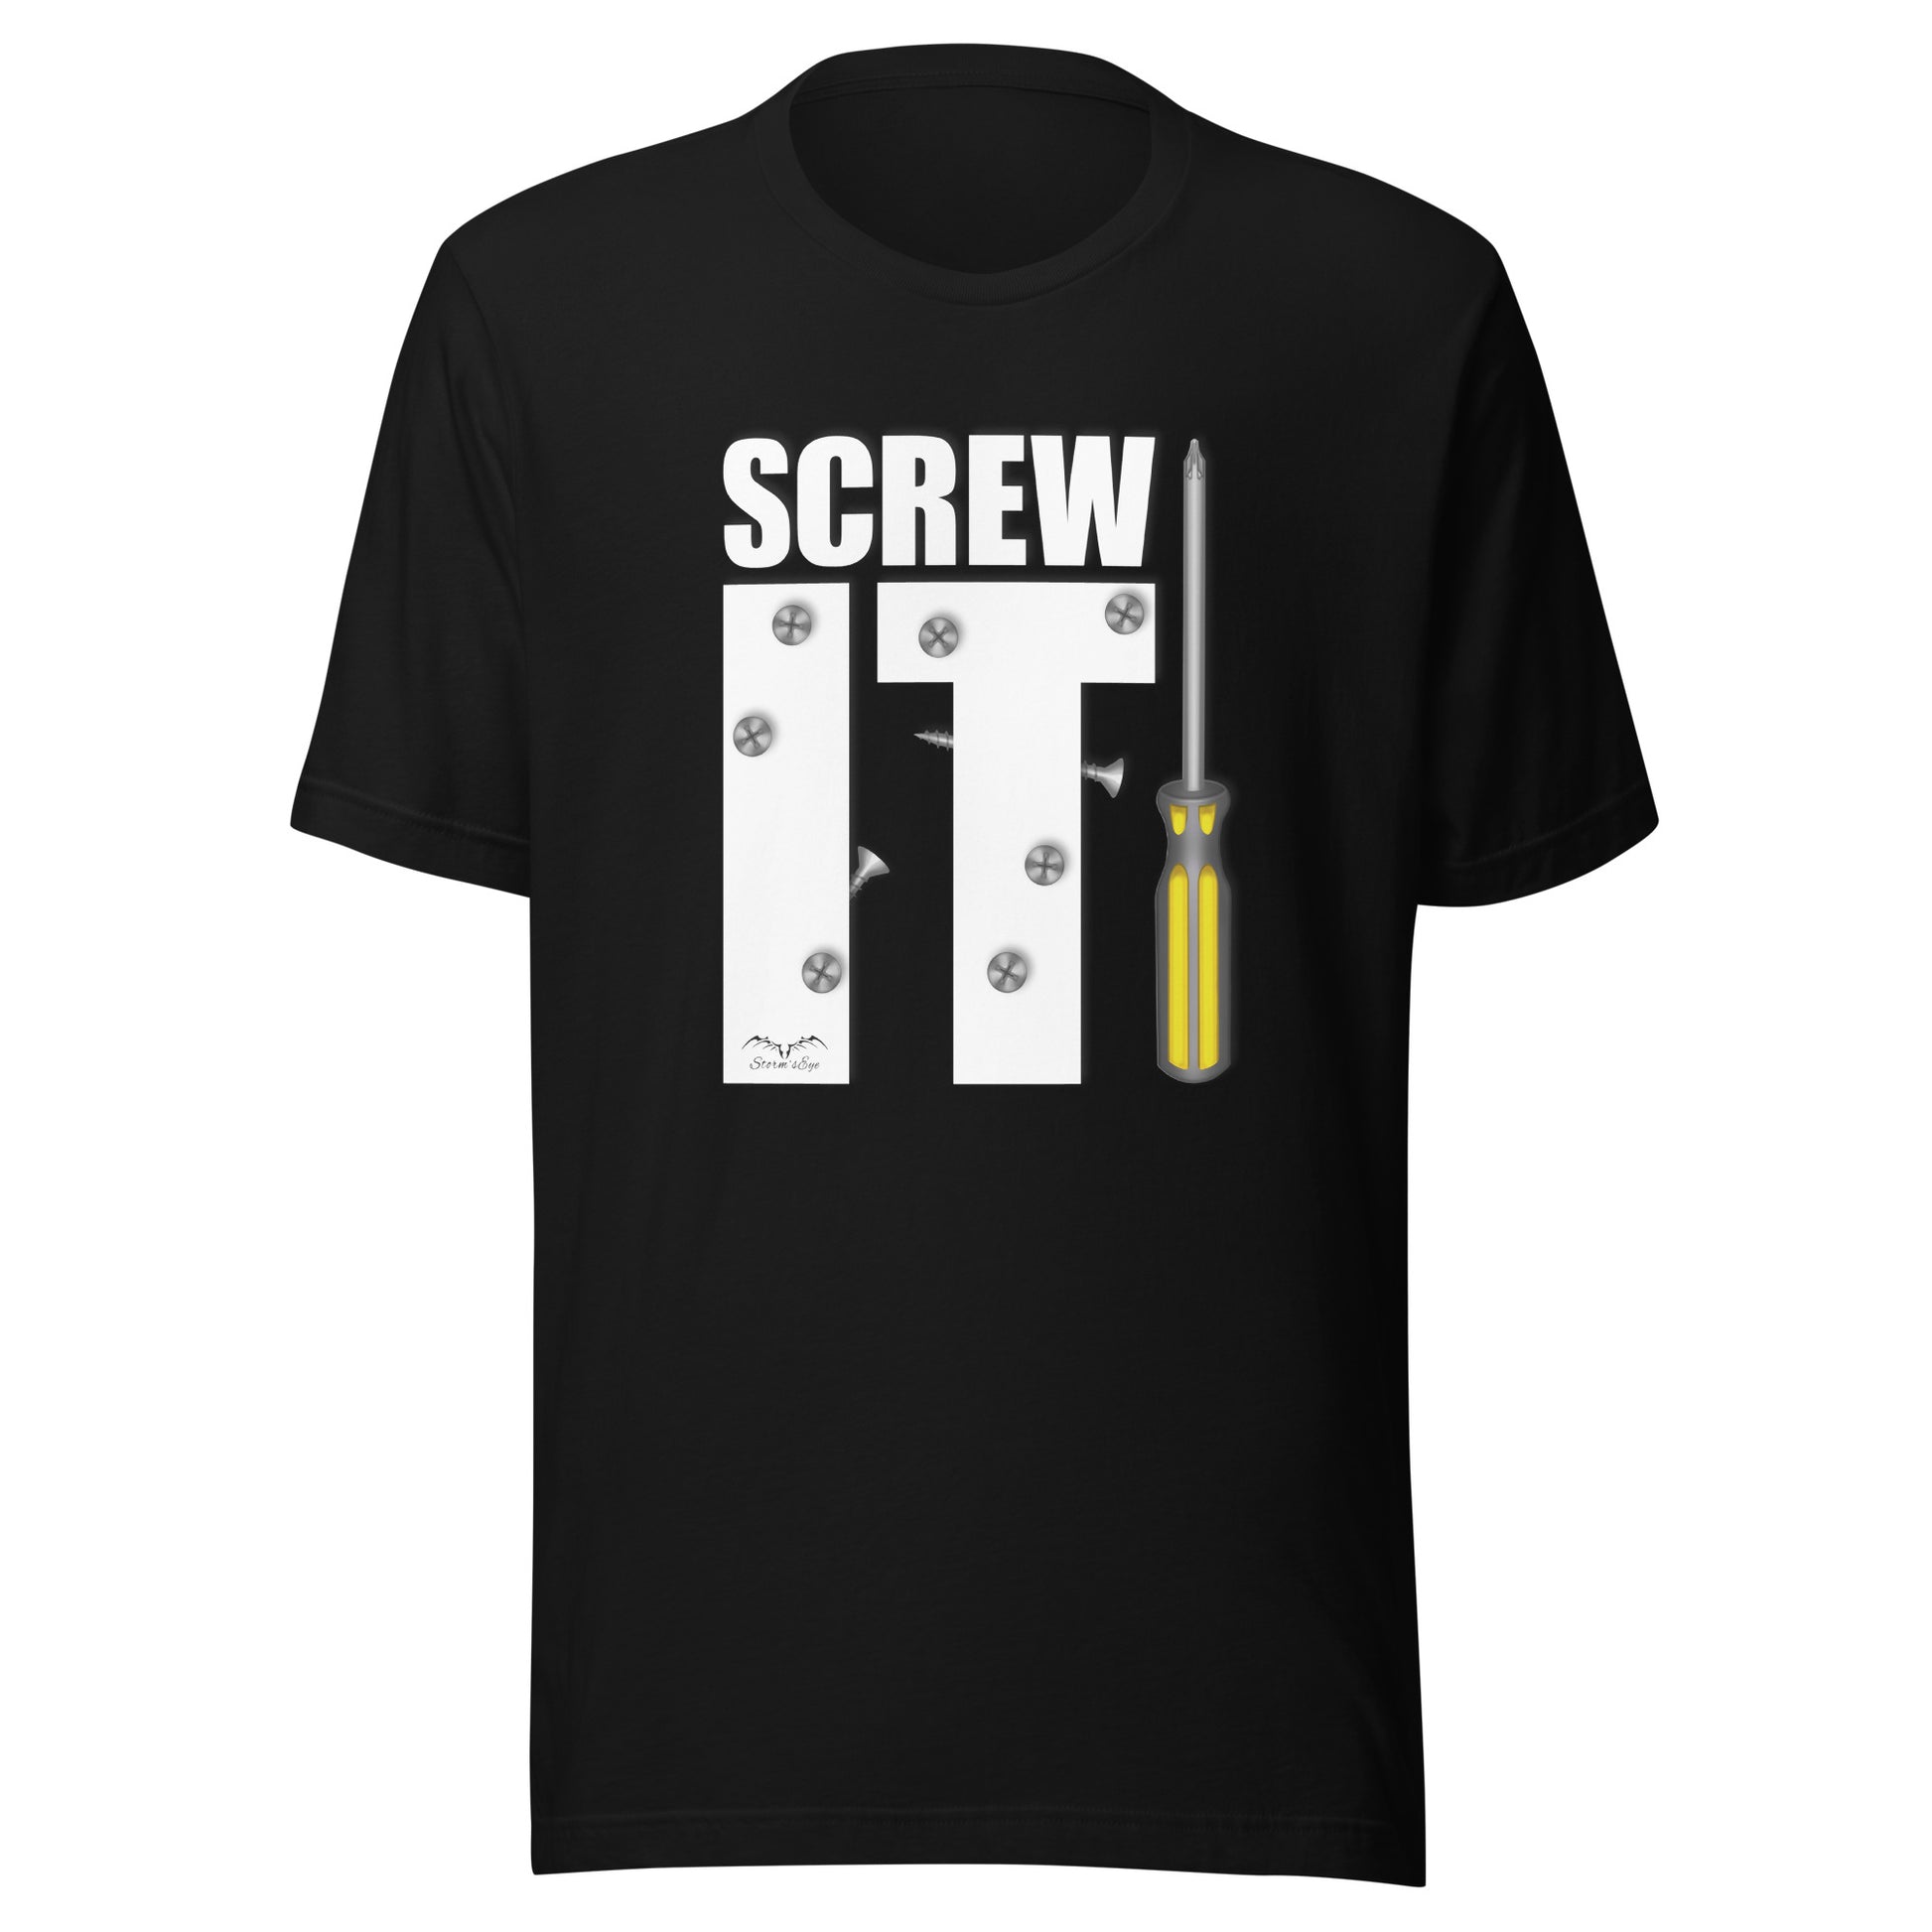 screw it DIY t-shirt black, by Stormseye Design